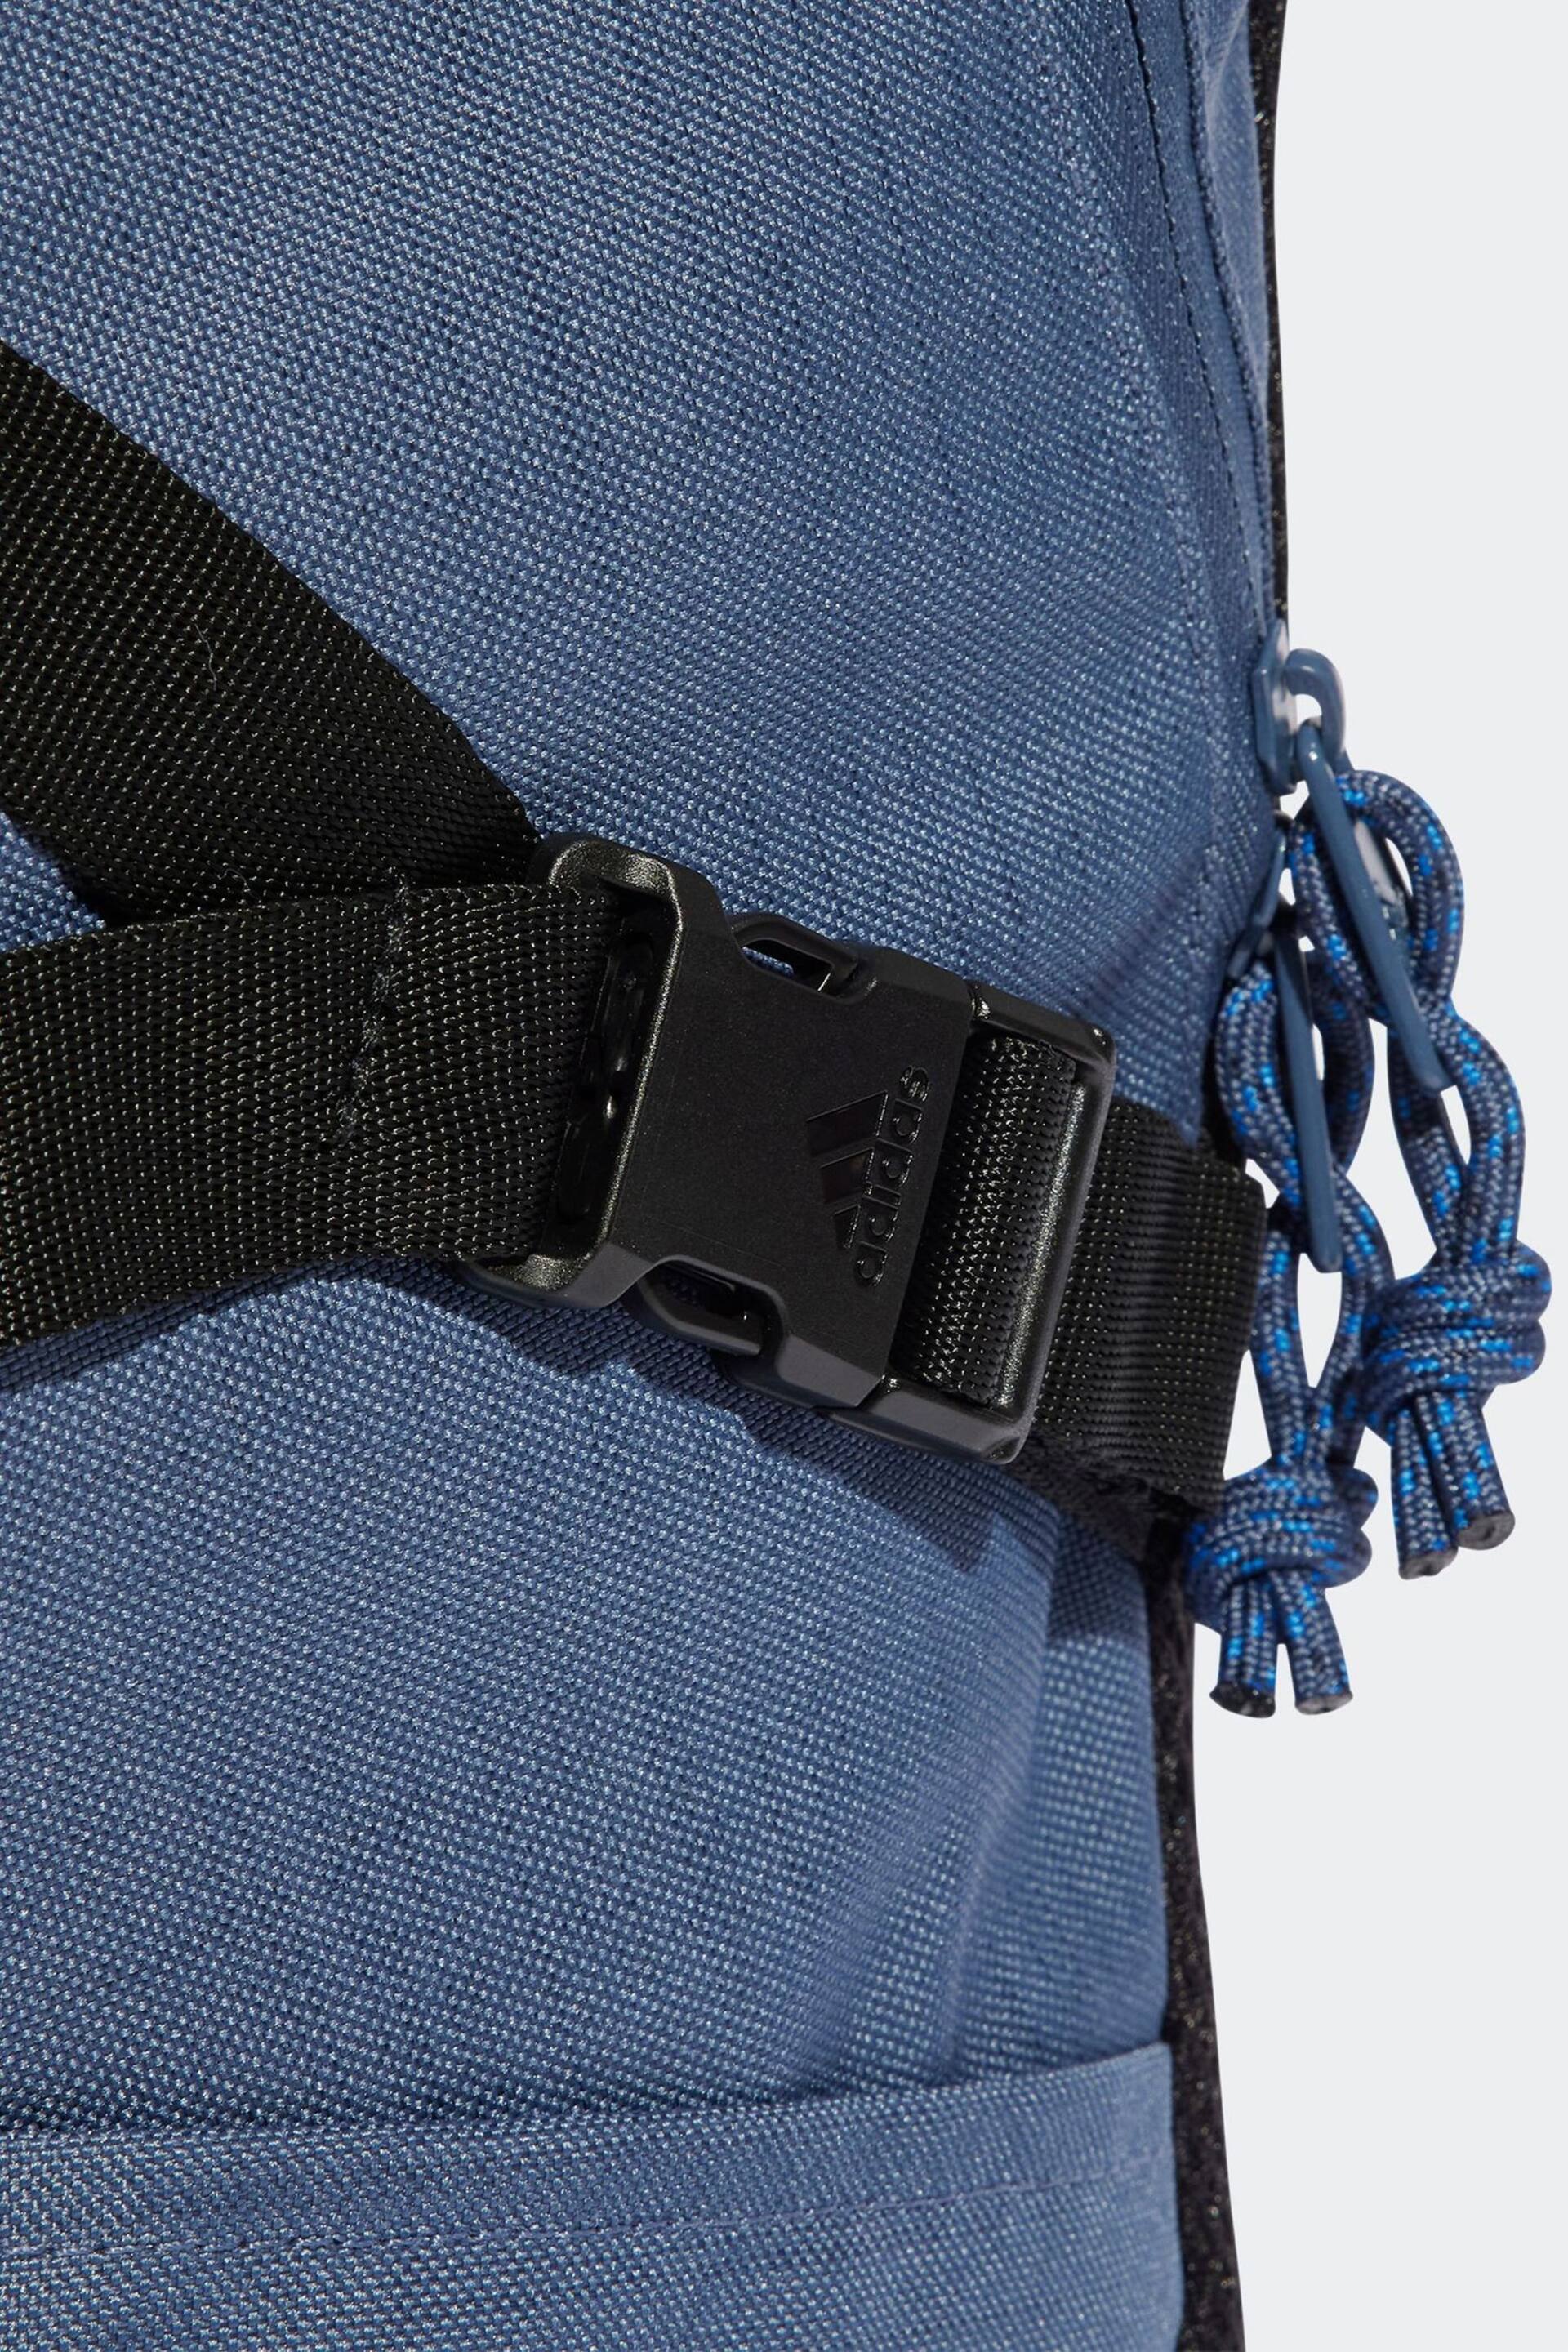 adidas Blue Power Backpack - Image 5 of 5